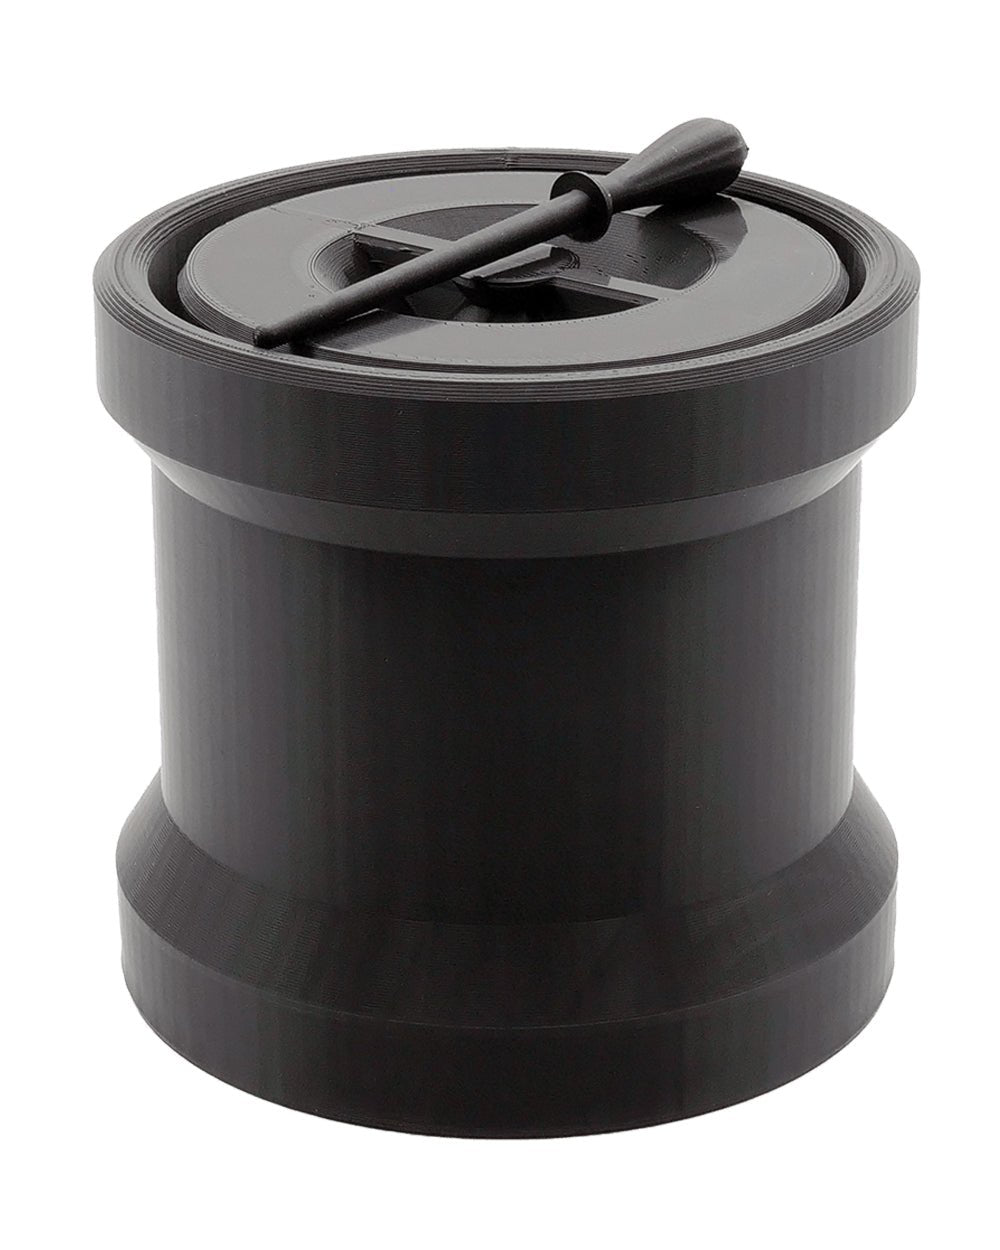 HUMBOLDT | Black Pre-Rolled Cones Filling Machine Cartridge 98mm | Fill 55 Cones Per Run - 2